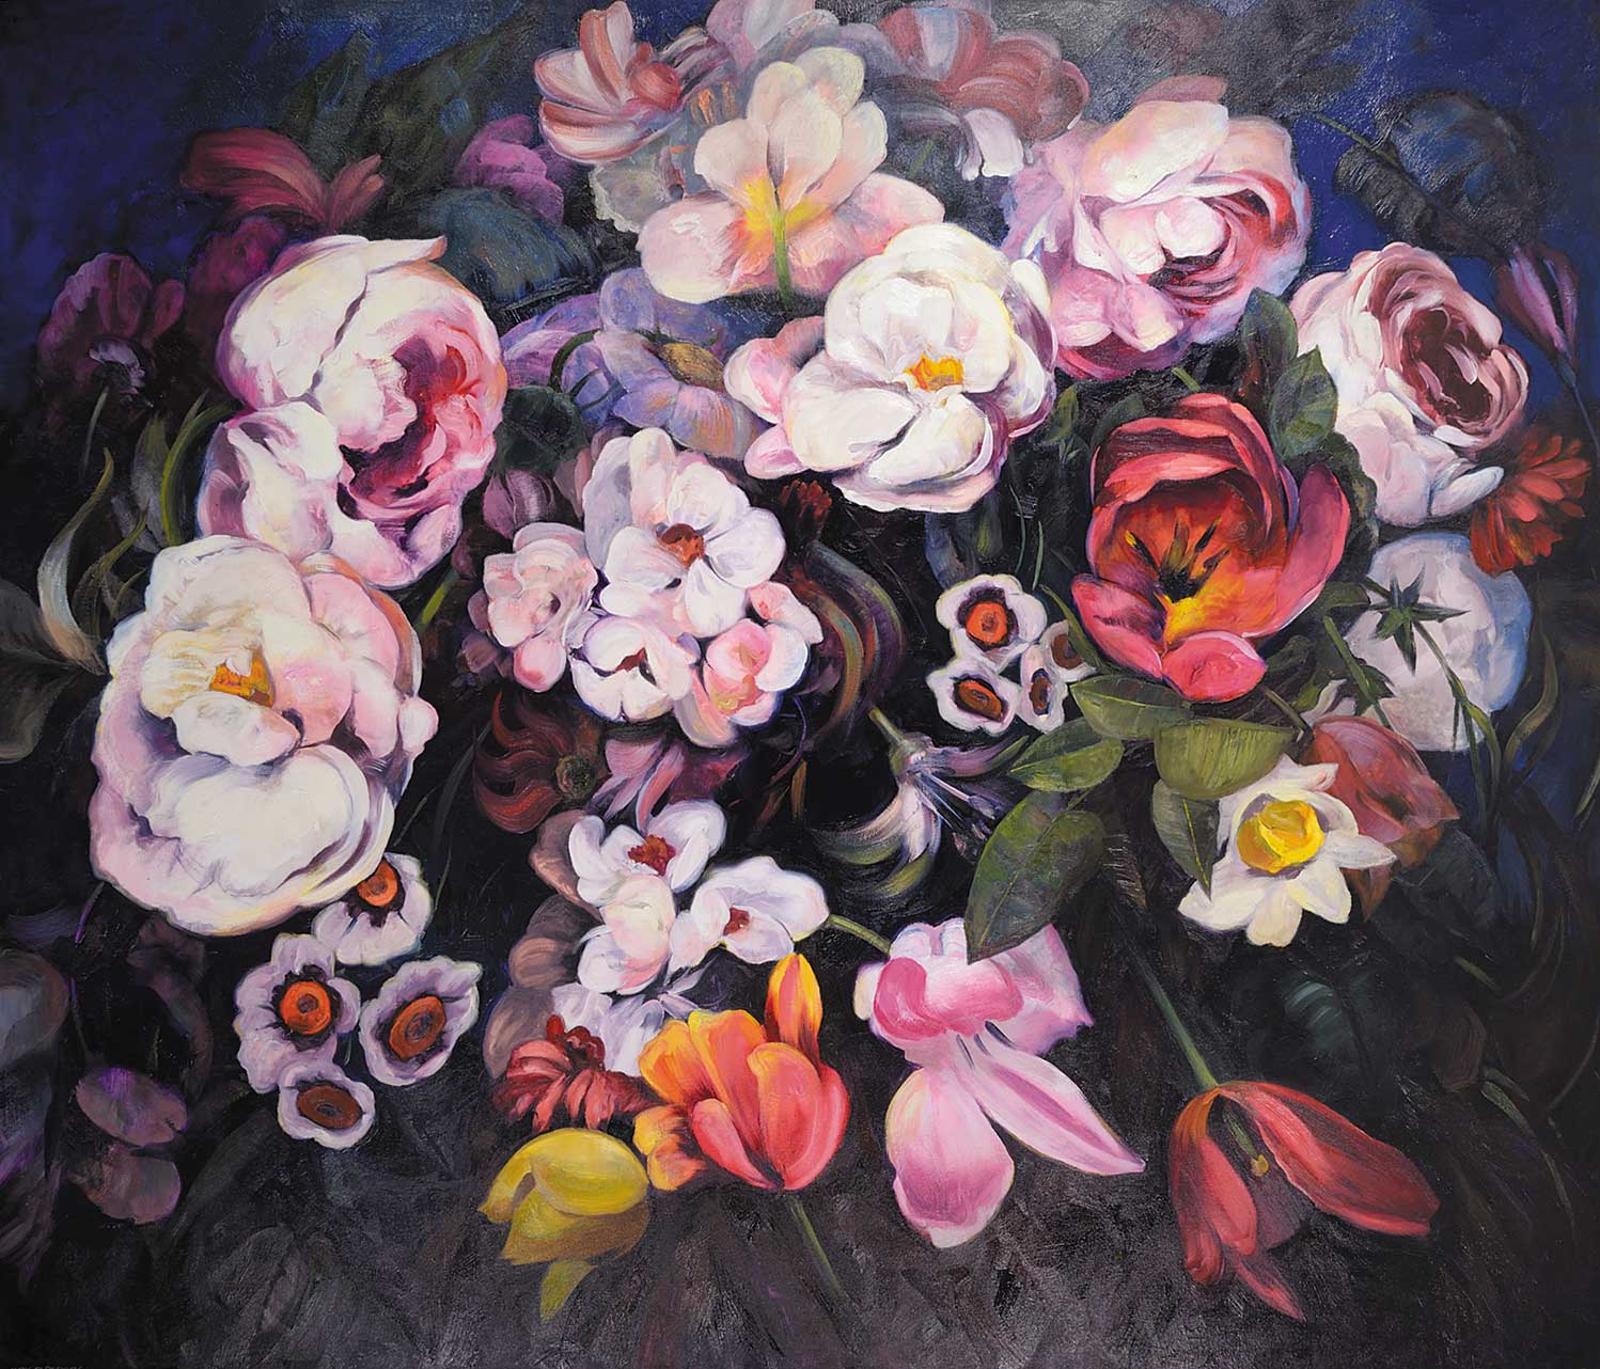 Chris S. Flodberg - Night Bouquet